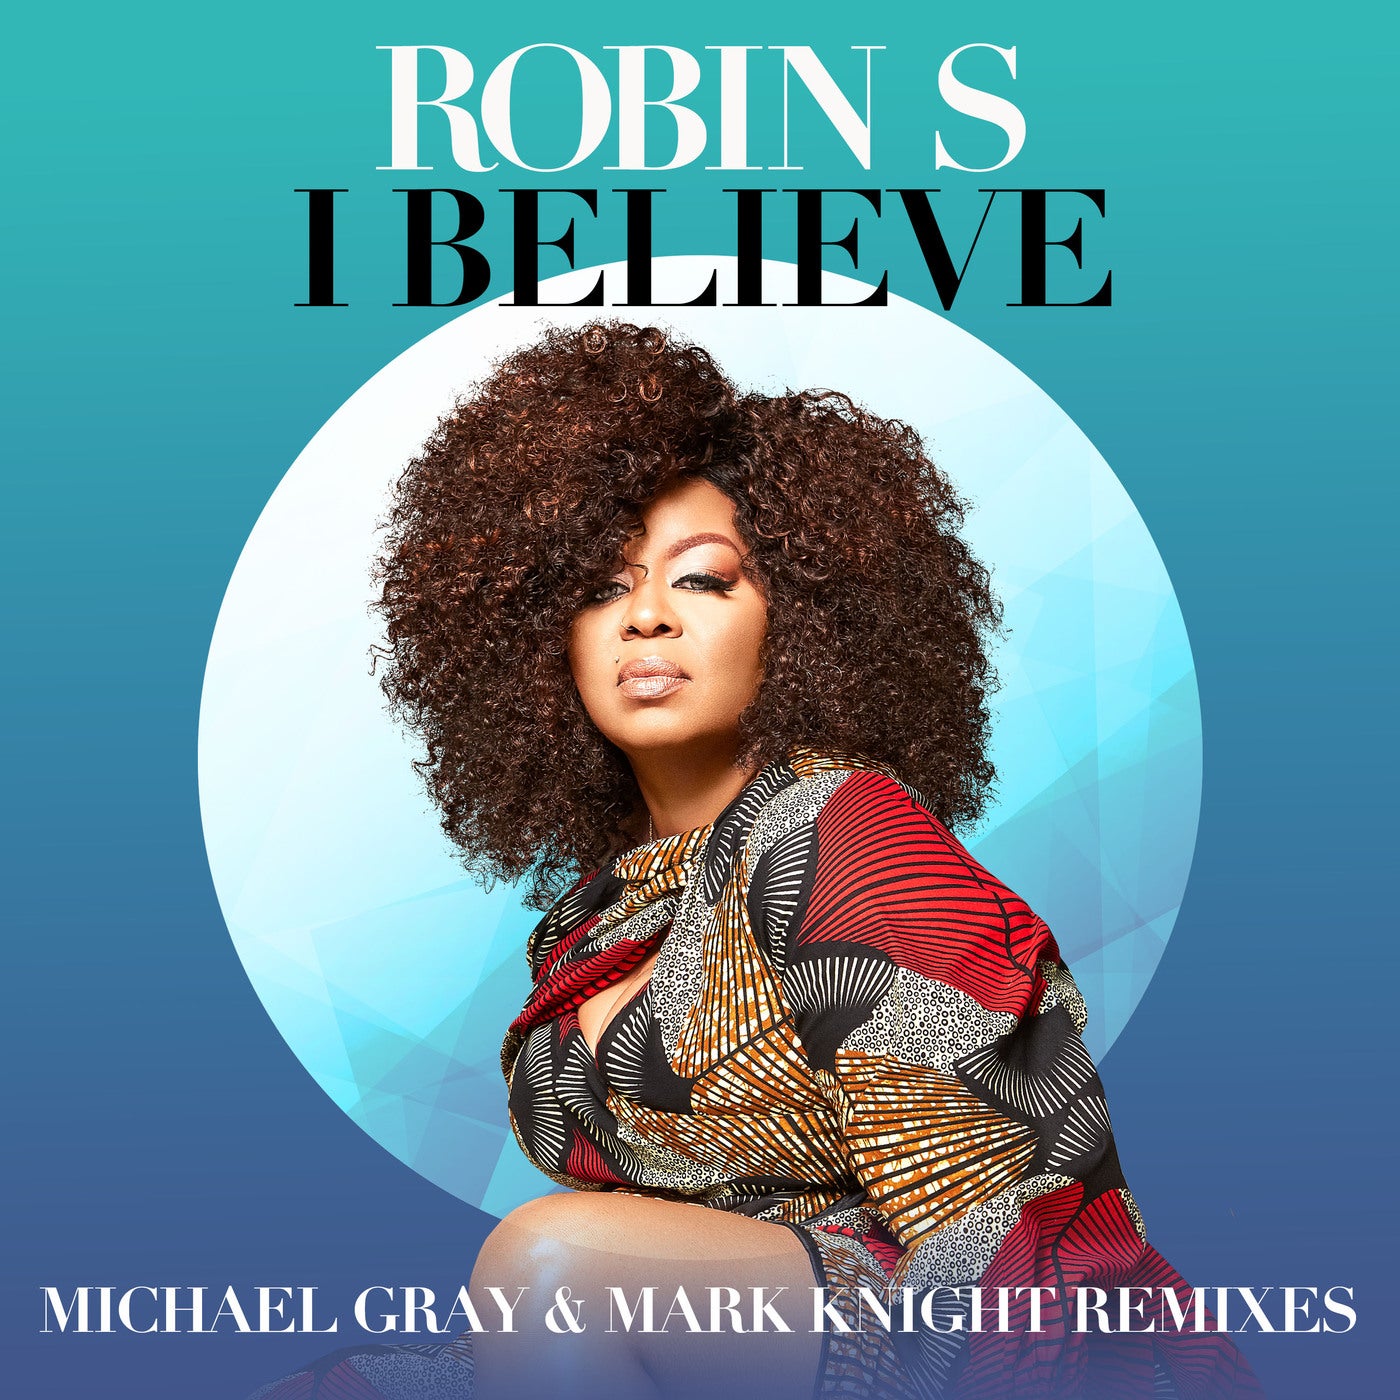 I Believe - Michael Gray & Mark Knight Remixes